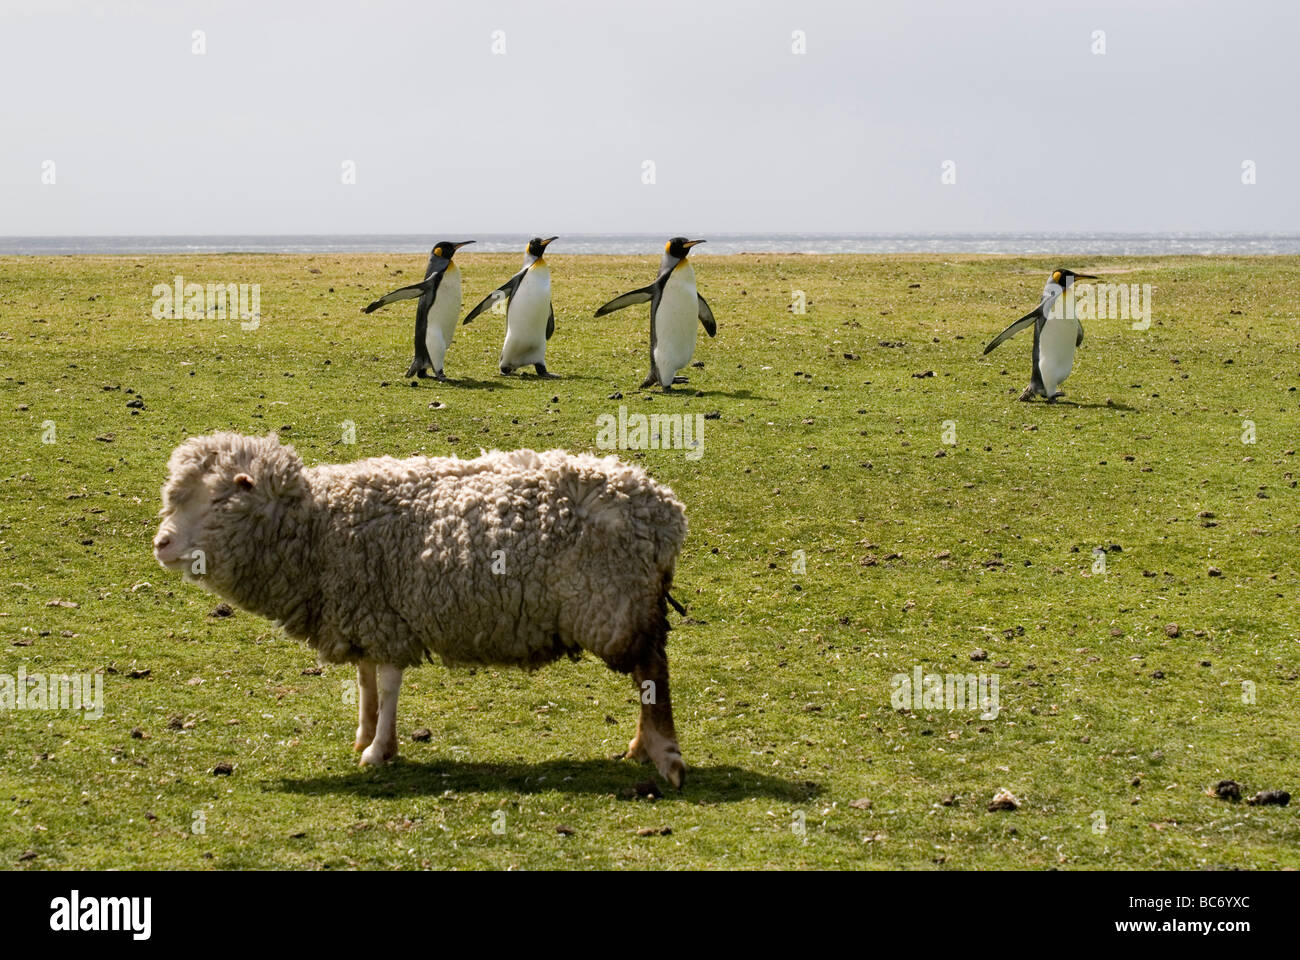 King Penguins, Aptenodytes patagonicus,walking past a domestic sheep on some farmland Stock Photo